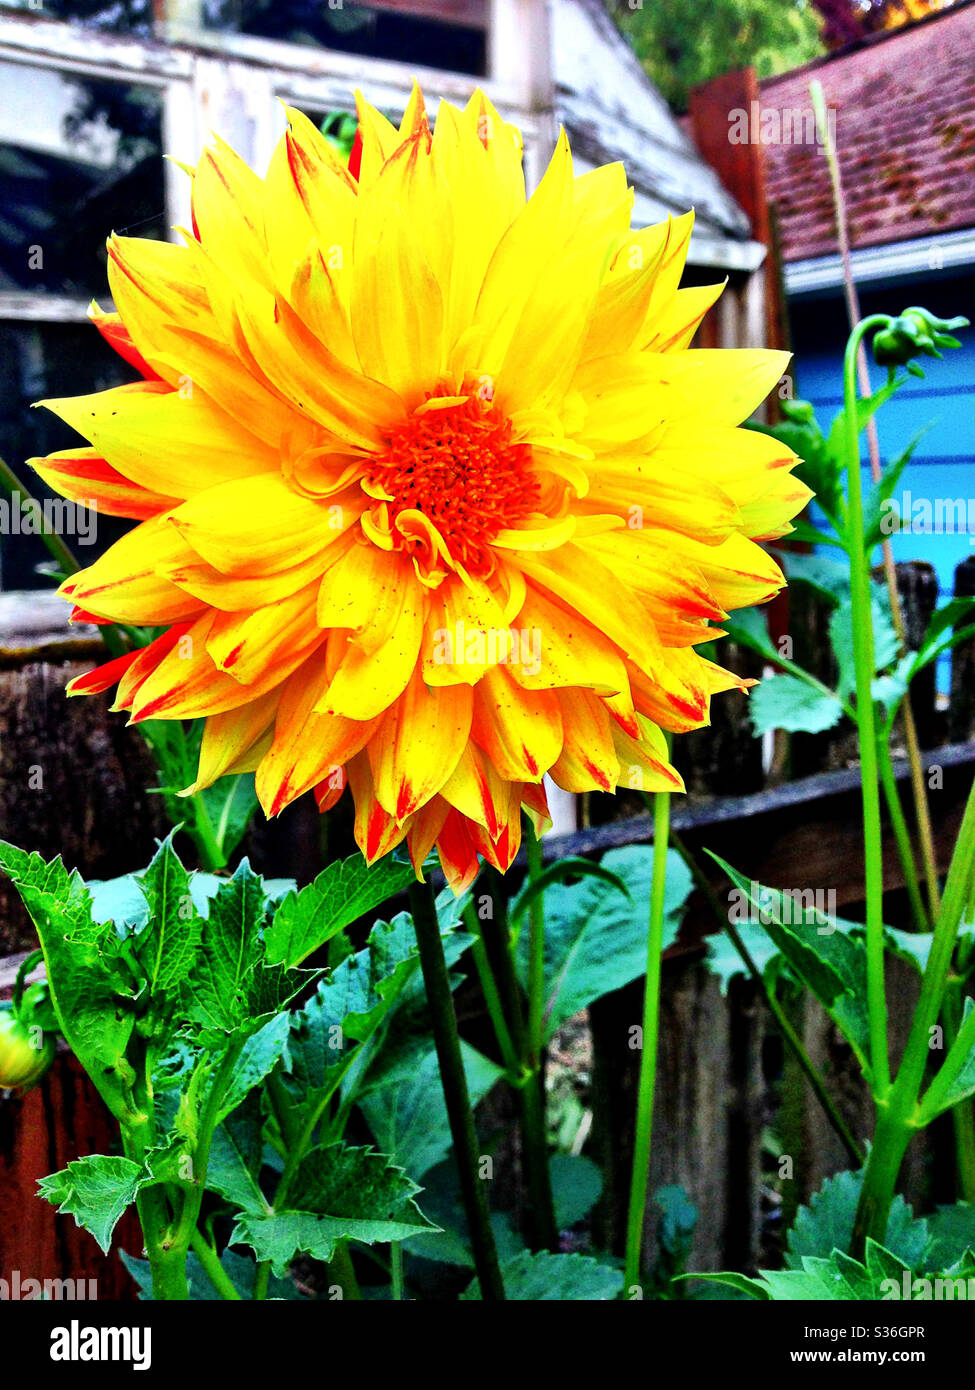 Bright Orange Sunflower in Backyard Garden Stock Photo